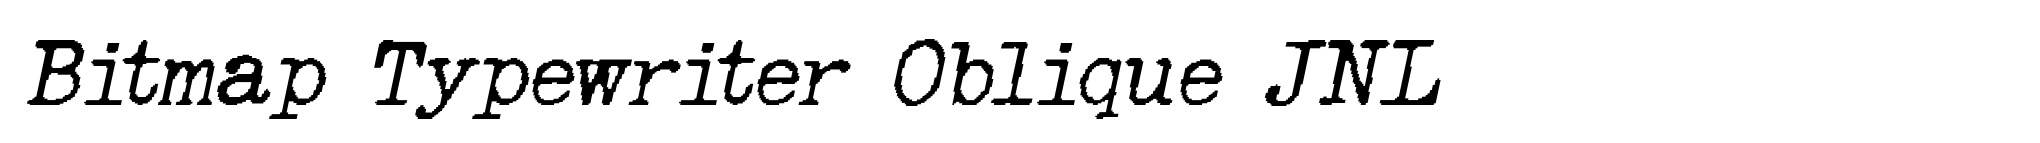 Bitmap Typewriter Oblique JNL image